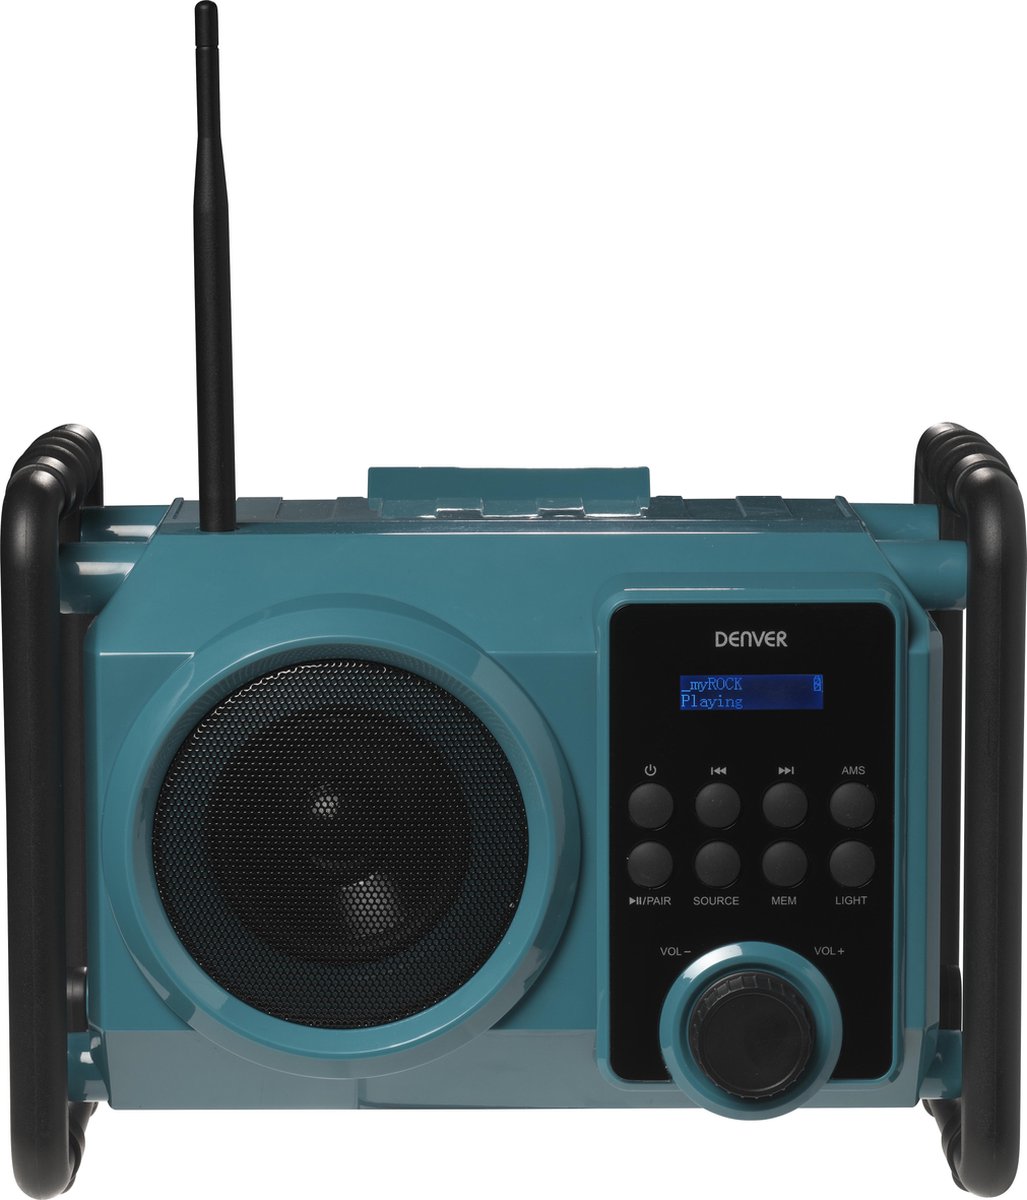 Denver WRB-50 - Werk FM radio